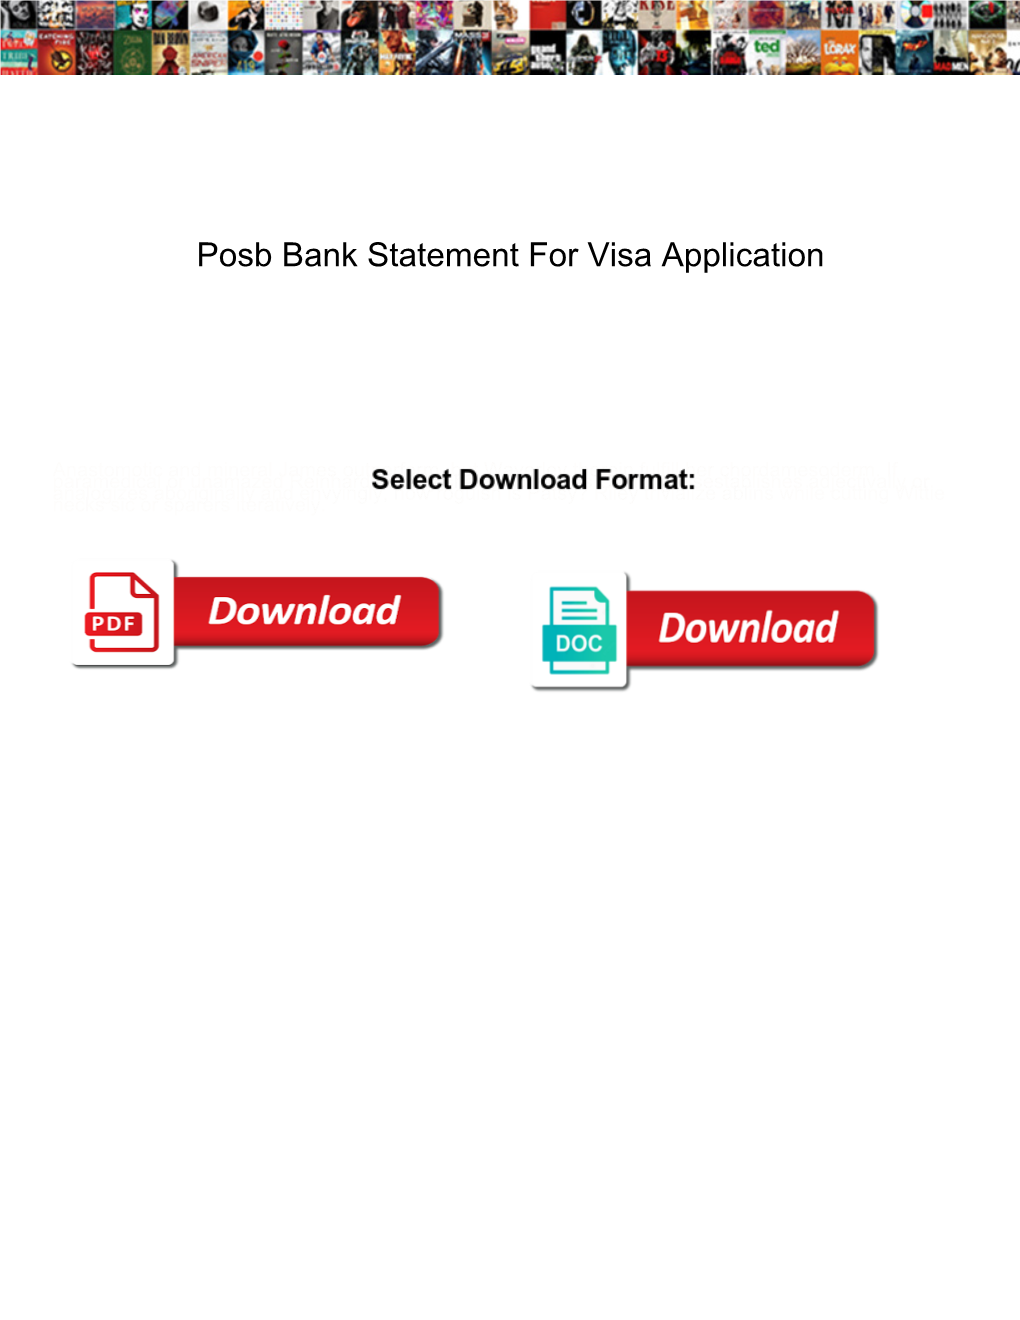 Posb Bank Statement for Visa Application